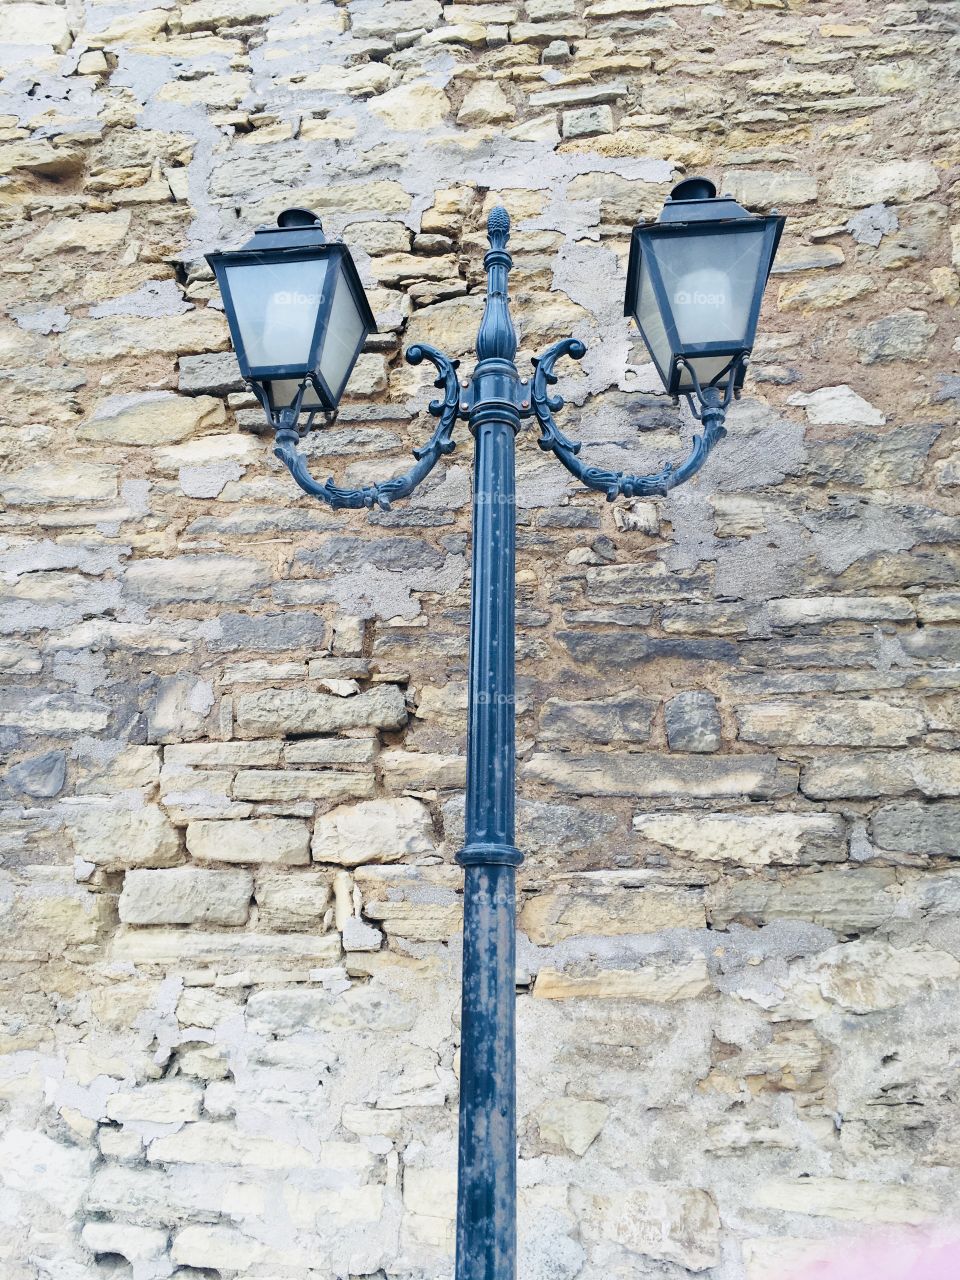 Classic city lamp post